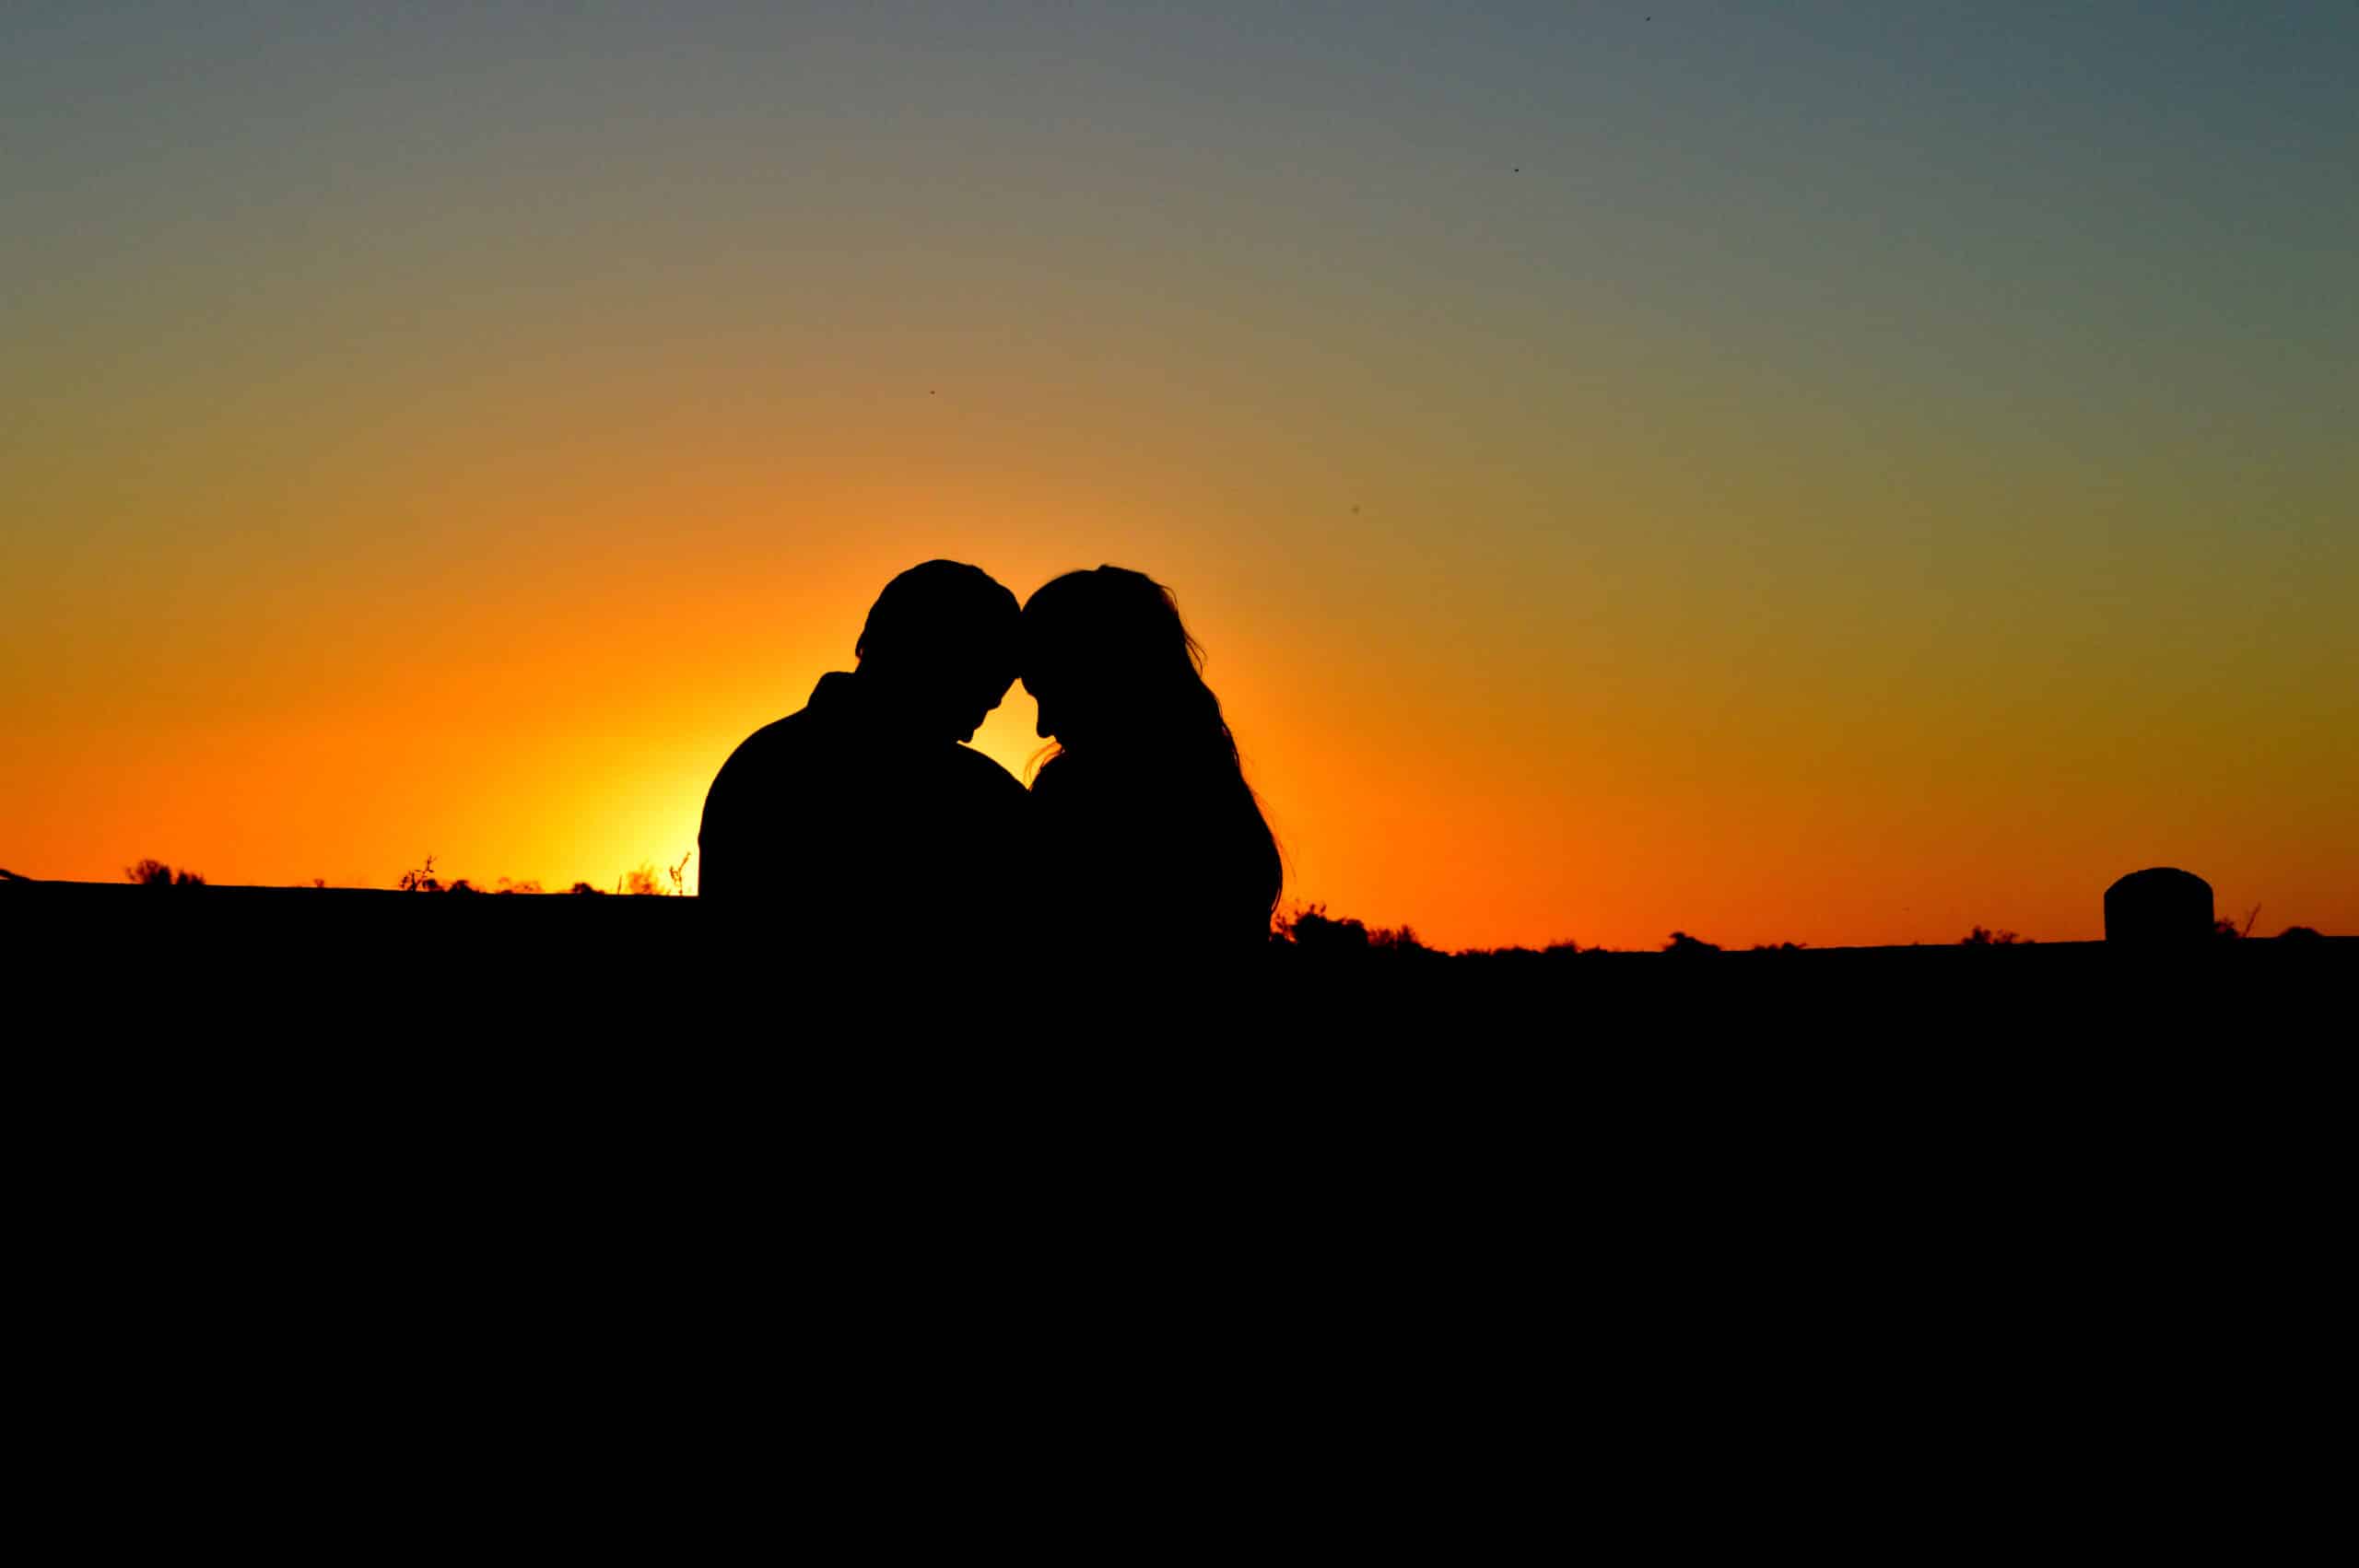 Sunset photo of couple in dark silhouette